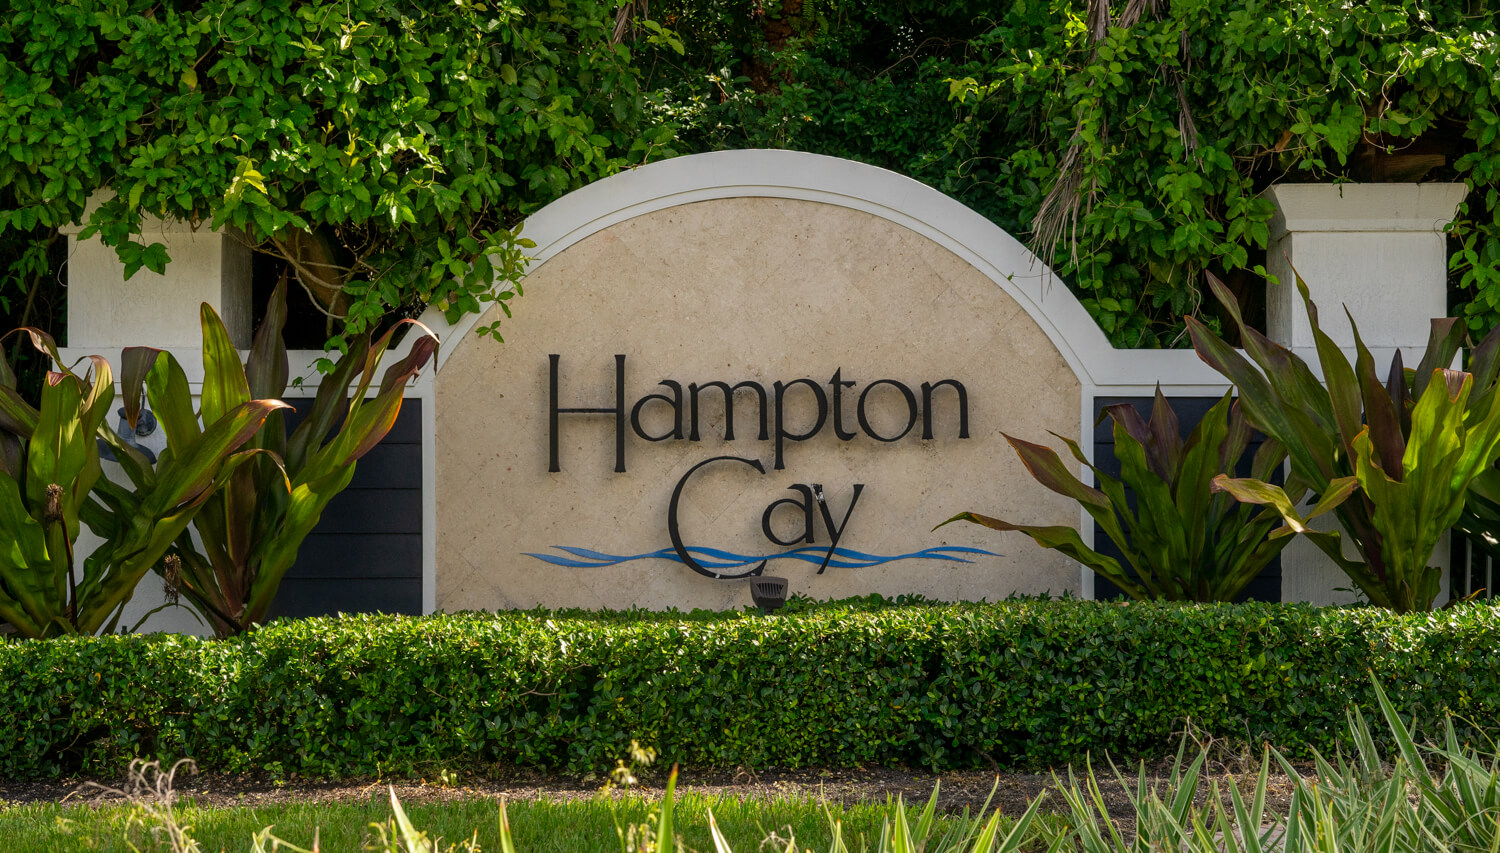 Hampton Cay Homes for Sale